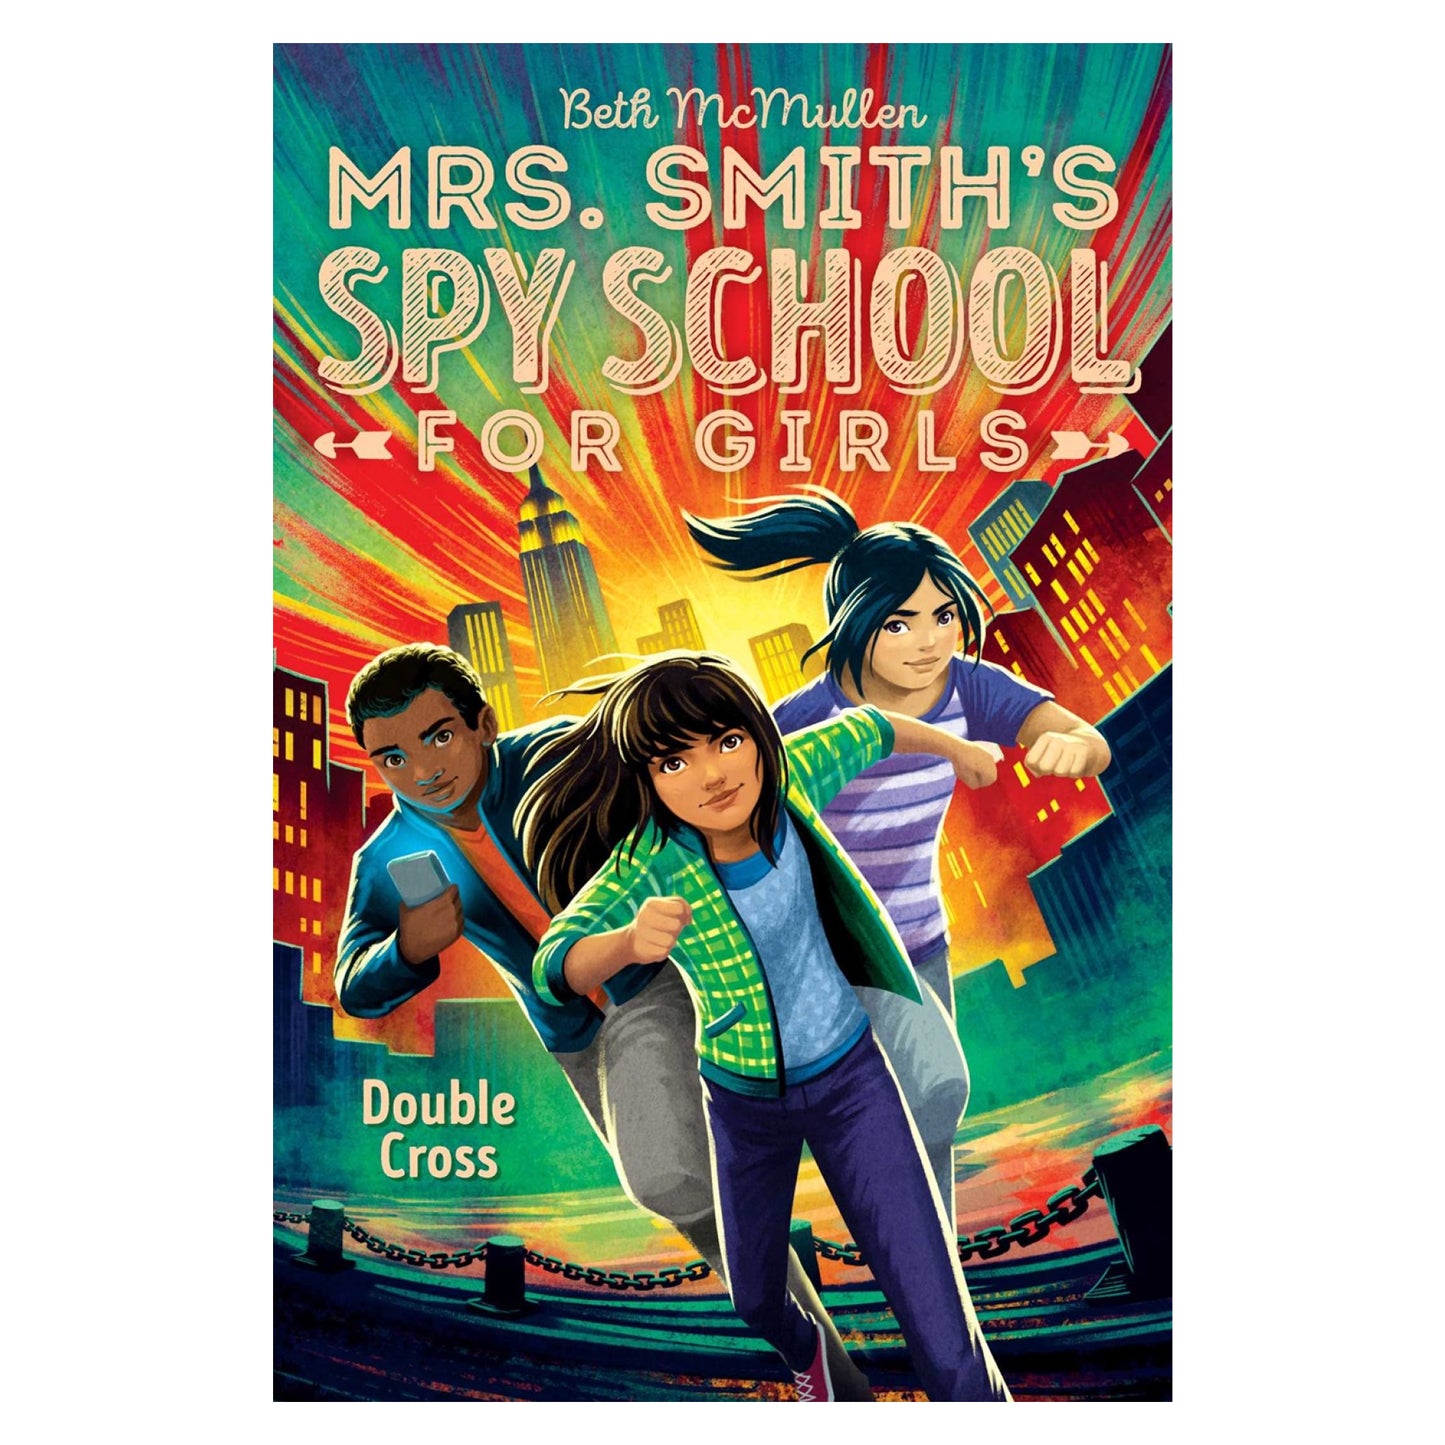 Double Cross (Mrs. Smith's Spy School For Girls #3)